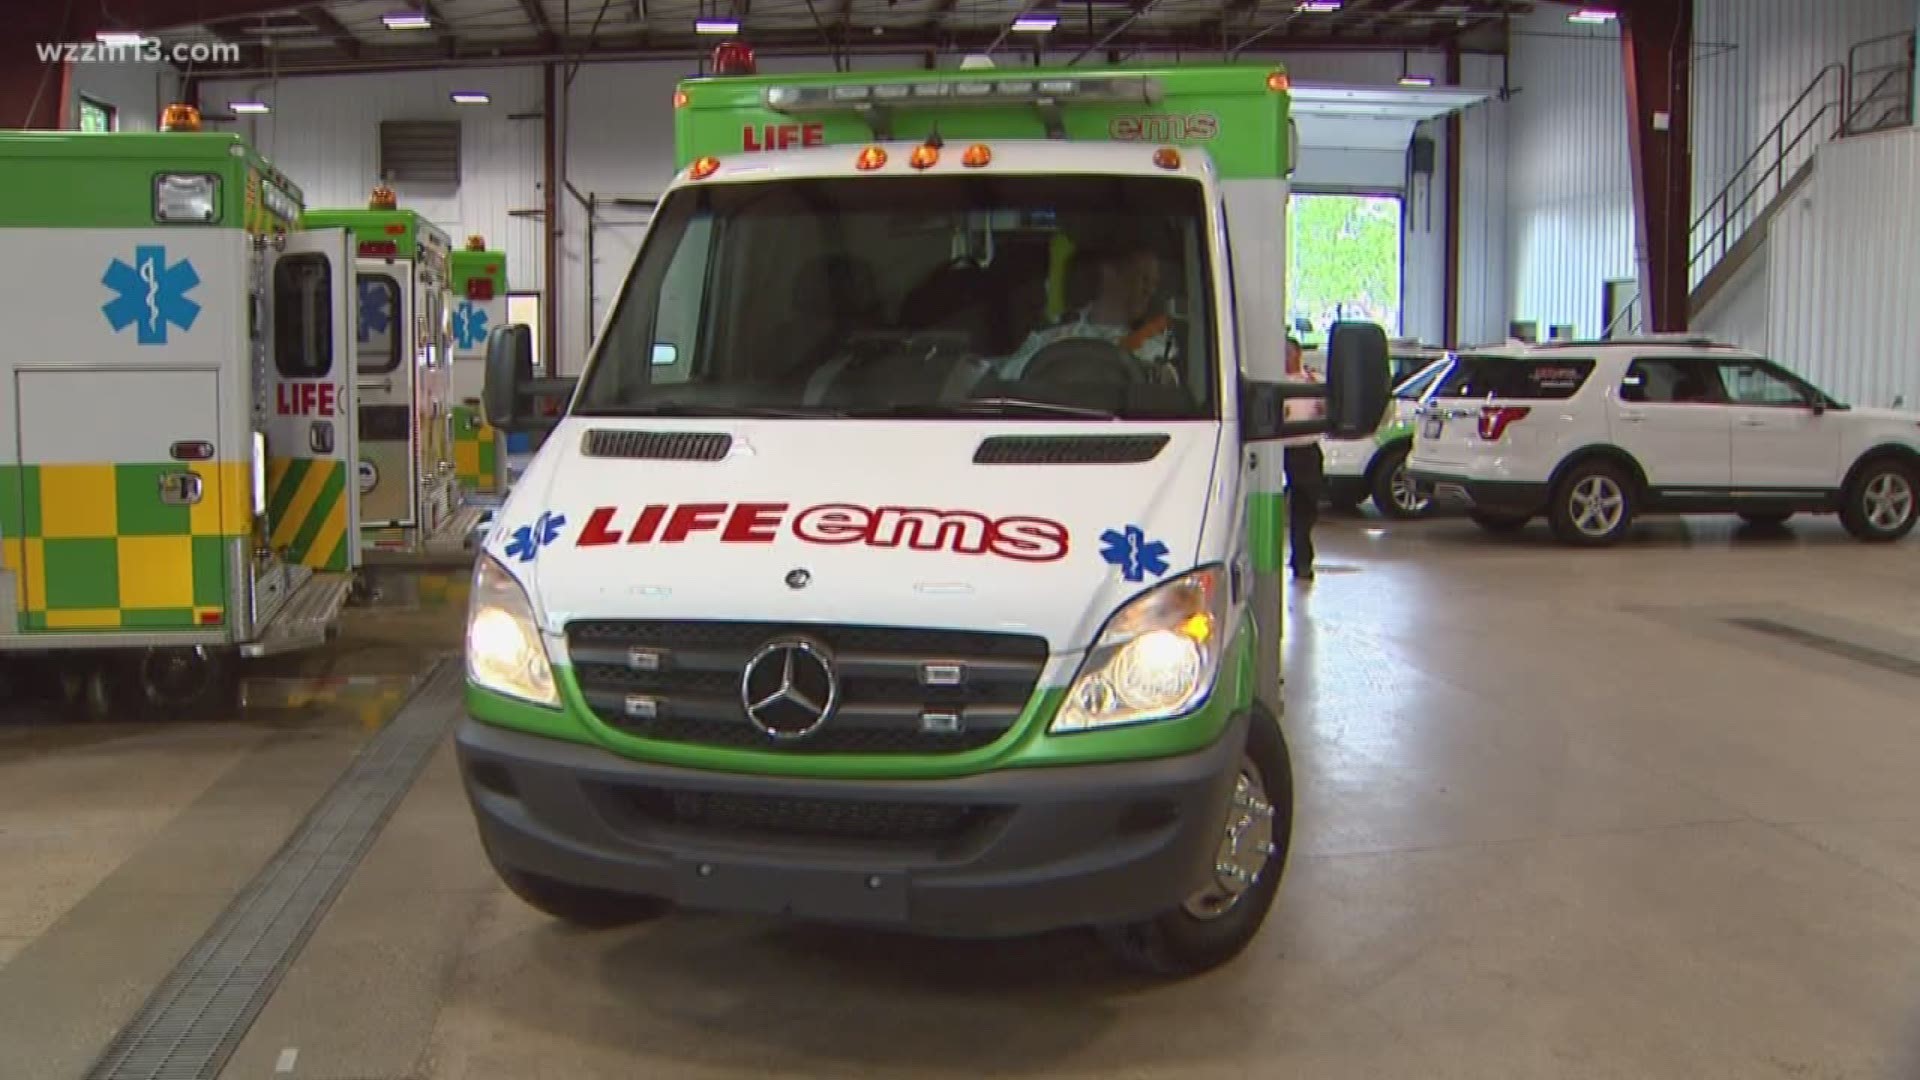 Paramedics turn ambulance into "Campulance"